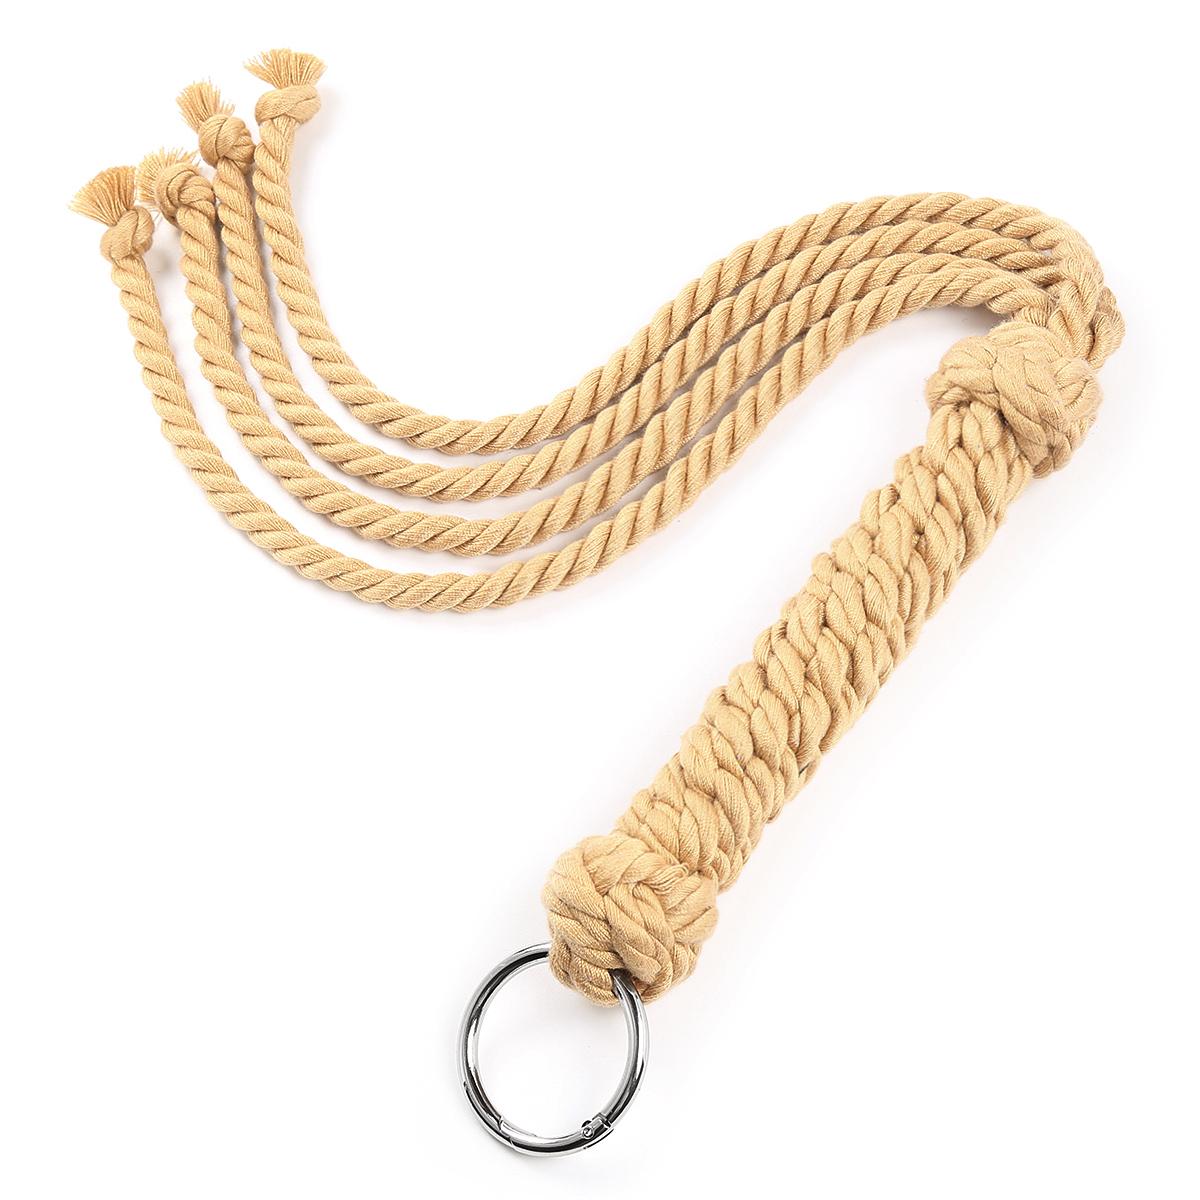 Natural Color Hemp Cotton Rope Flogger Bondage Slave Spanking Whip